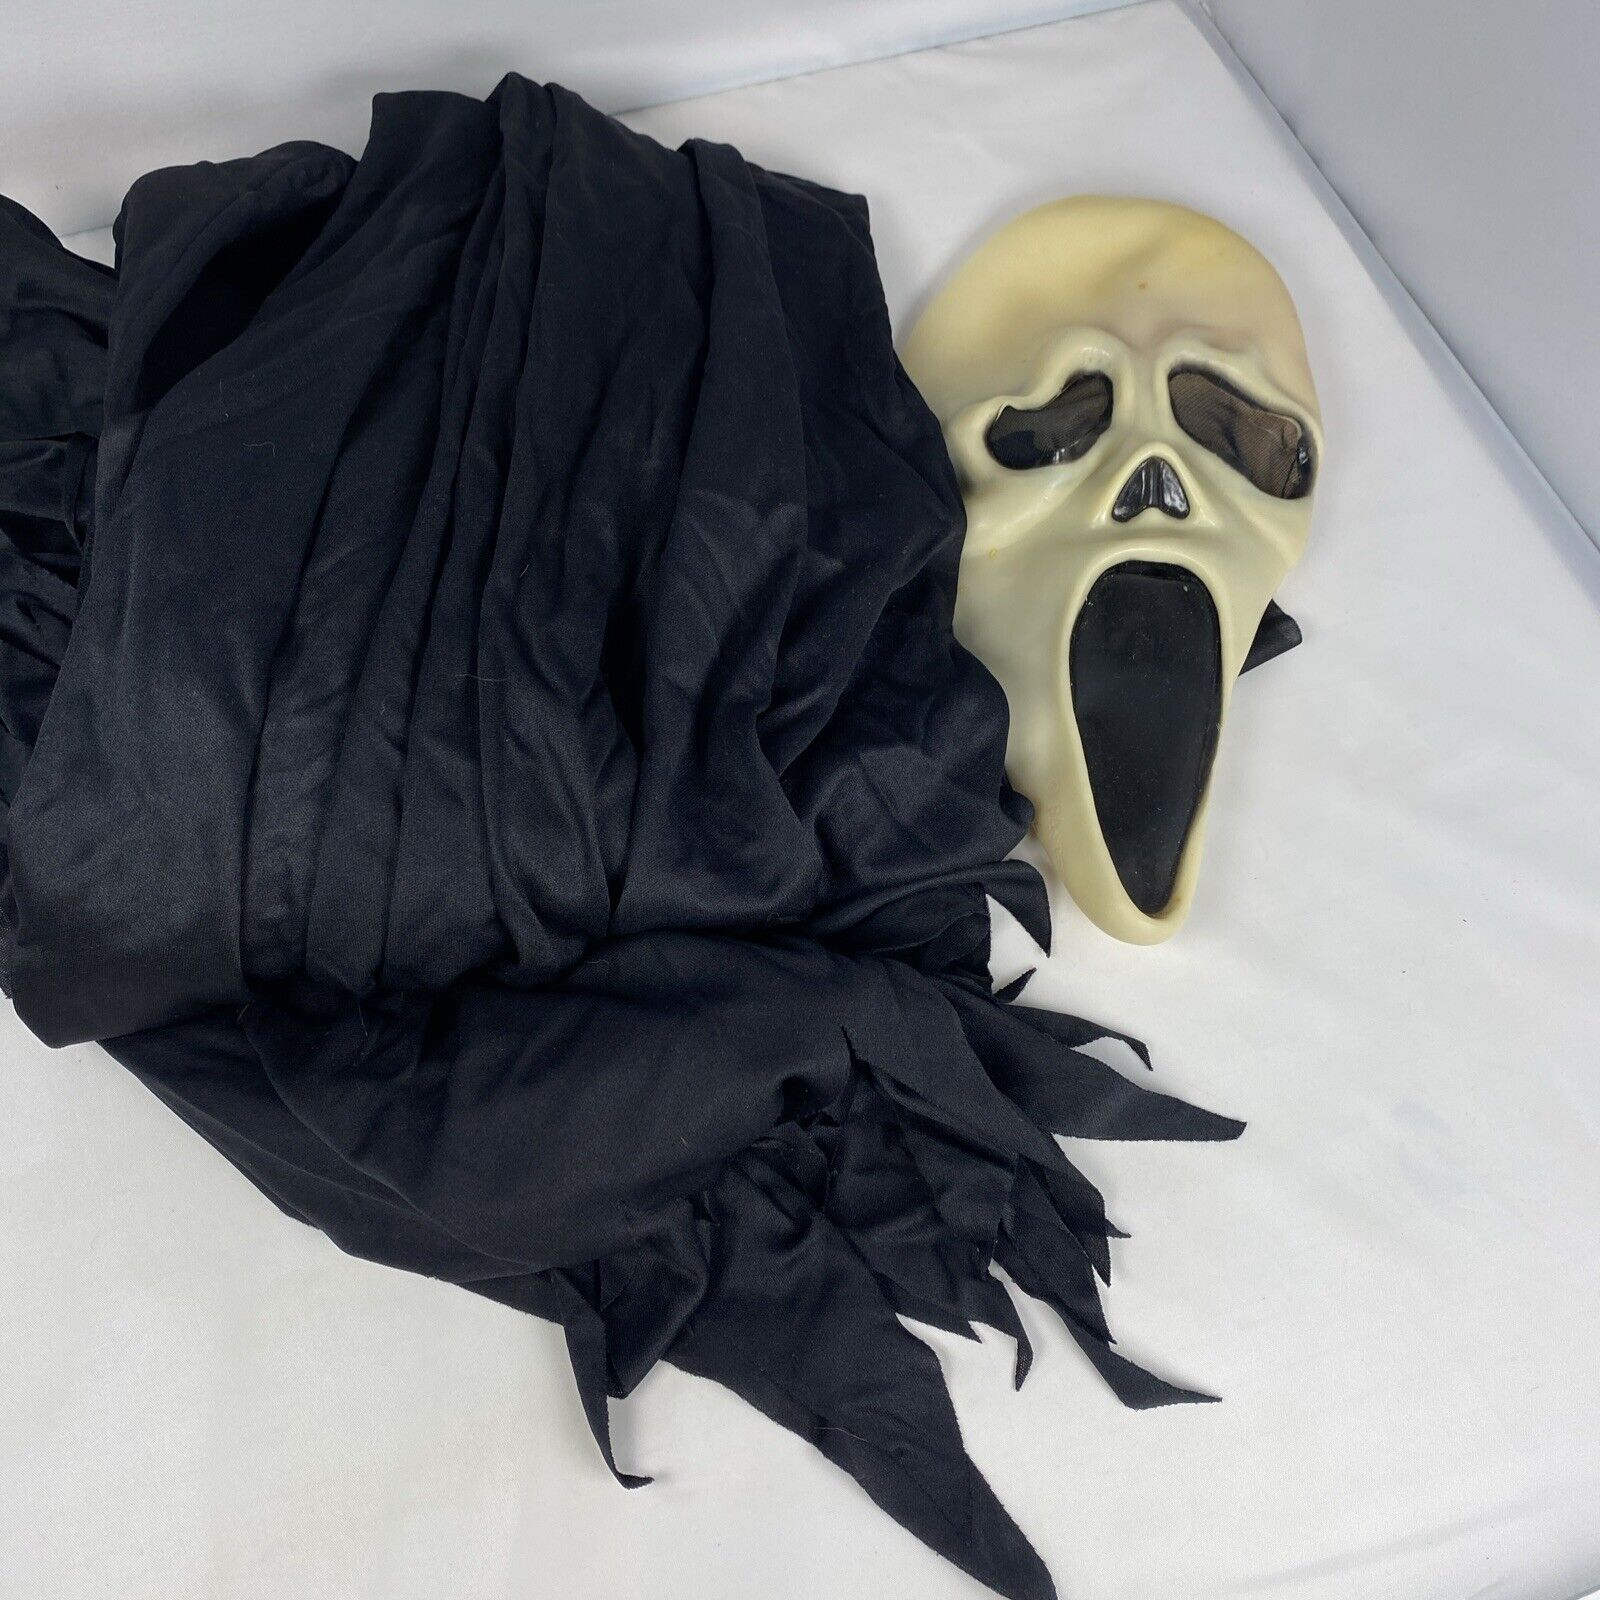 Vintage Original Scream Mask And Hooded Robe Costume Adult